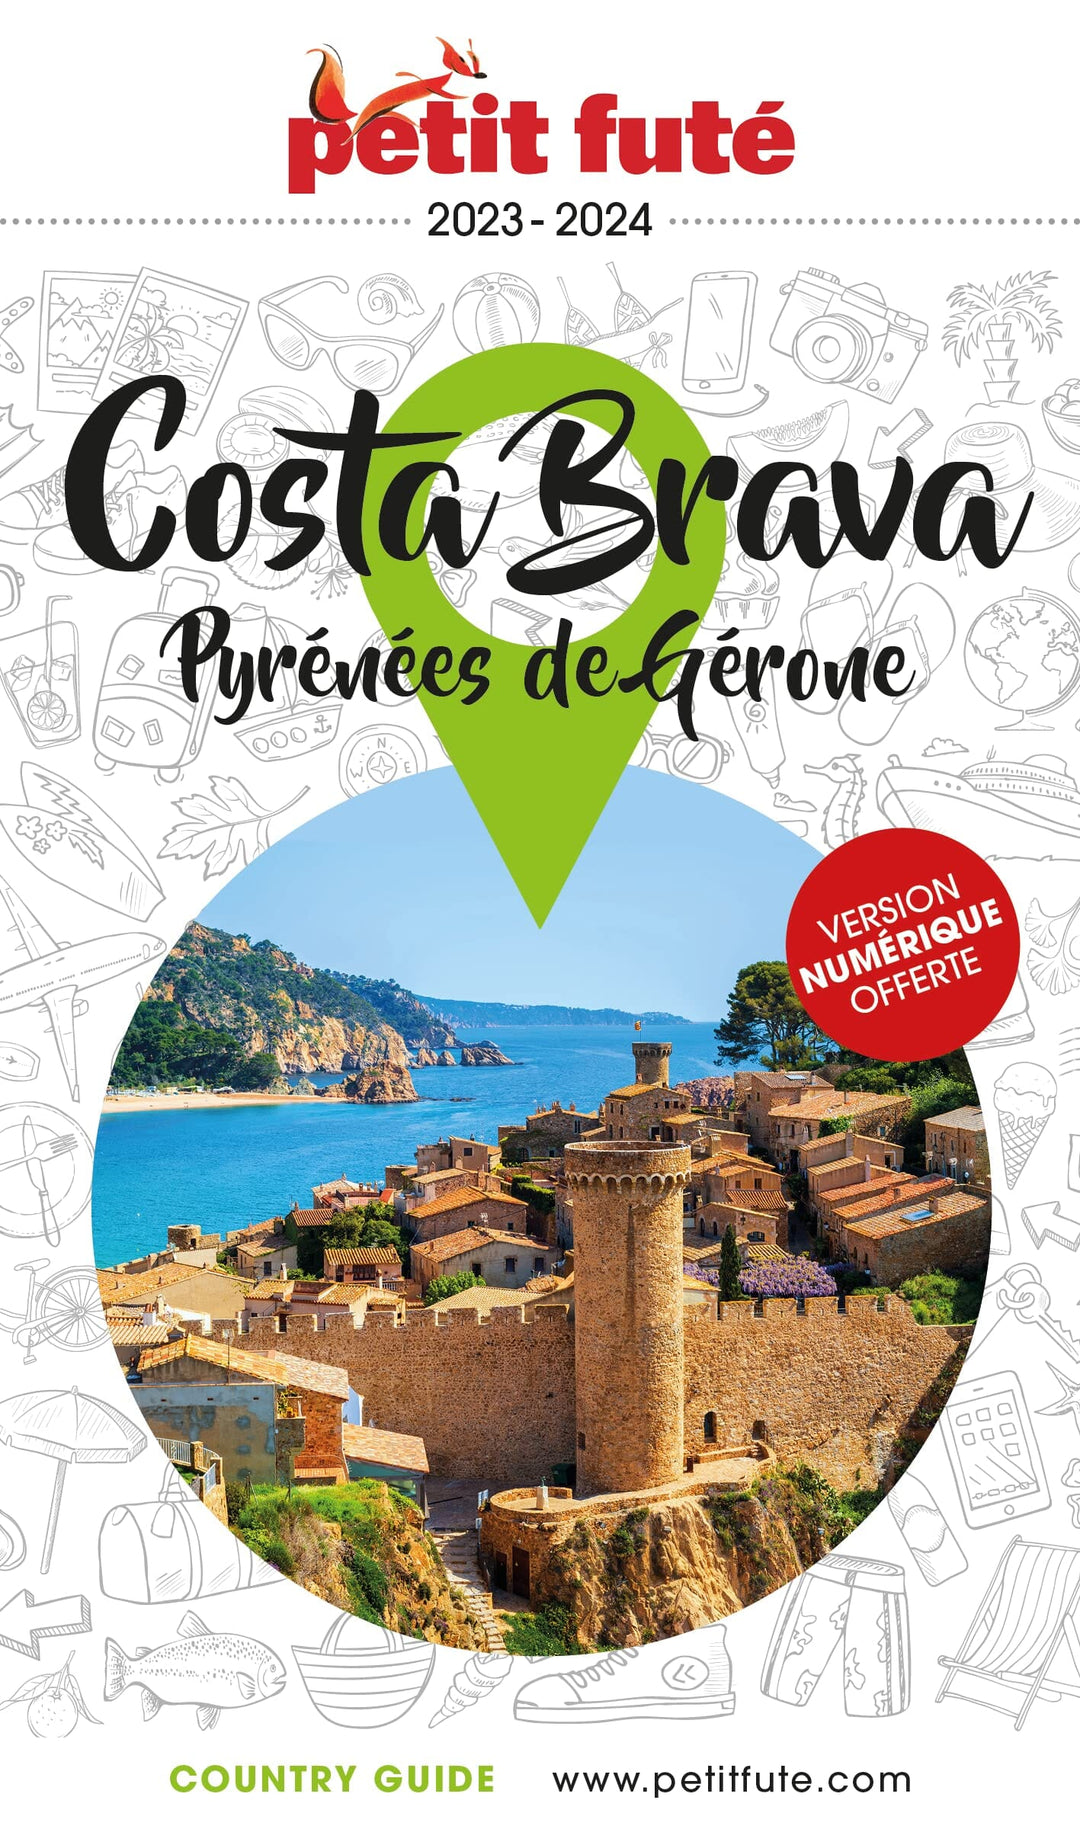 Guide de voyage - Costa Brava, Pyrénées de Gérone 2023/24 | Petit Futé guide de voyage Petit Futé 